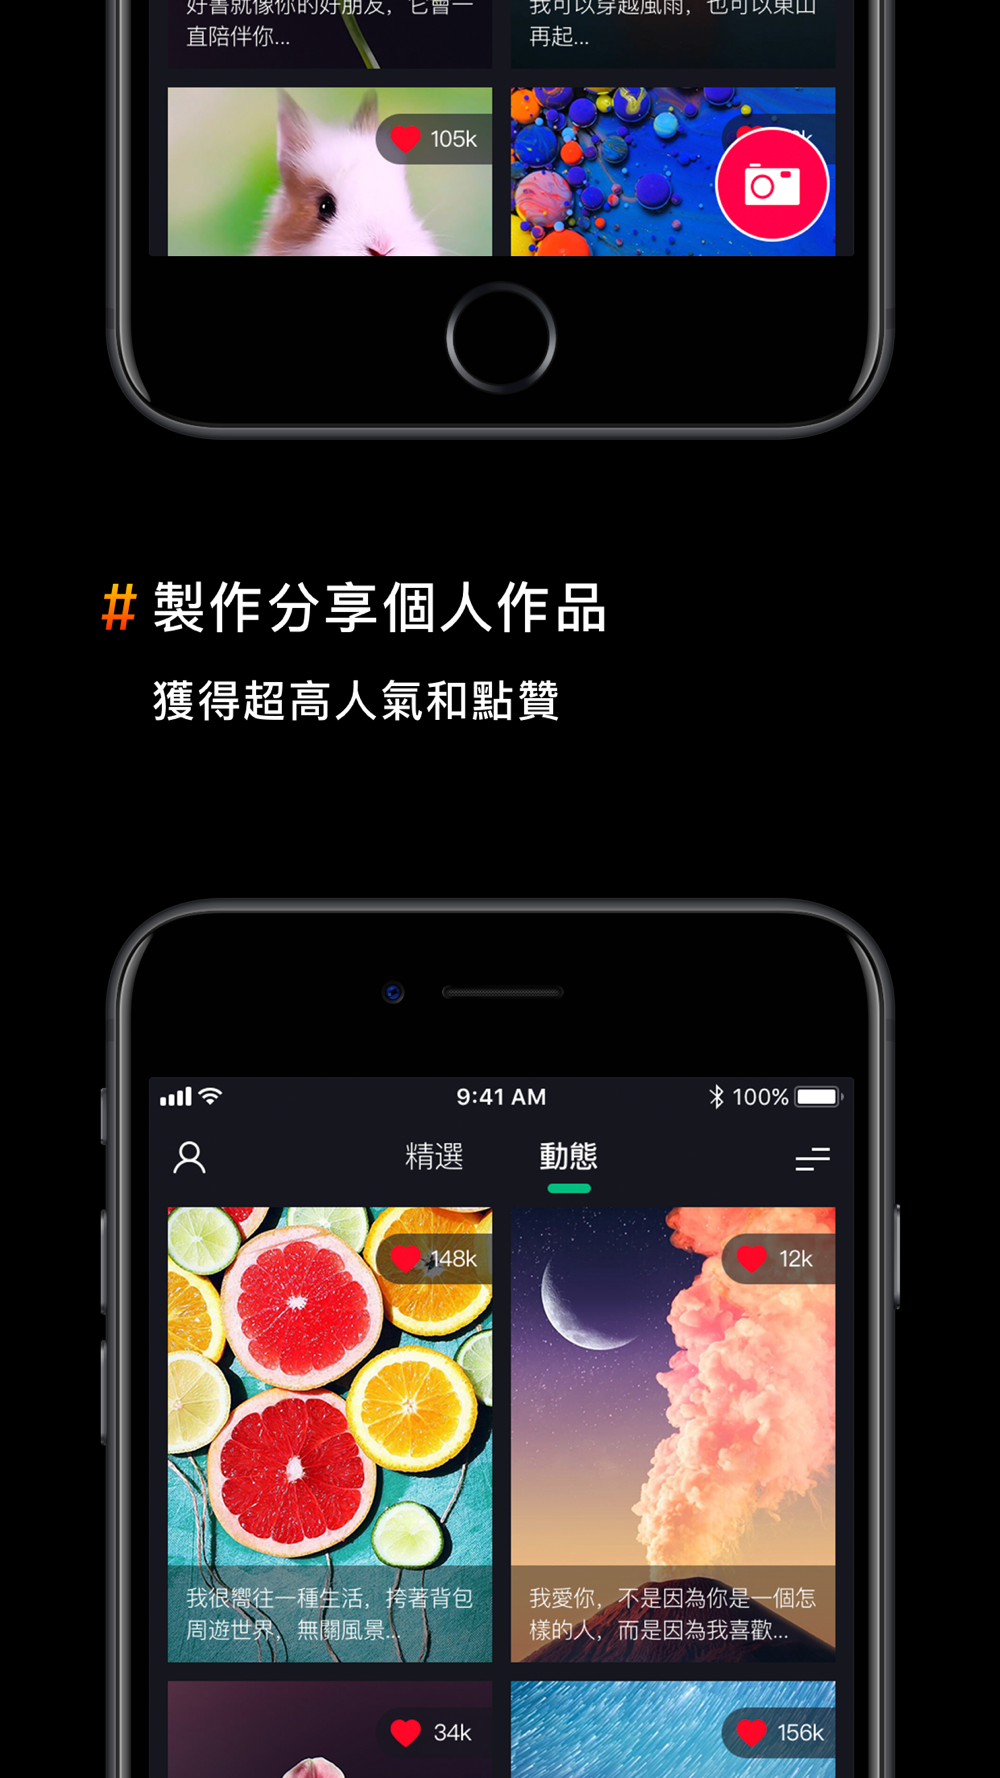 Itheme 動態高清手機壁紙 背景主題free Download App For Iphone Steprimo Com